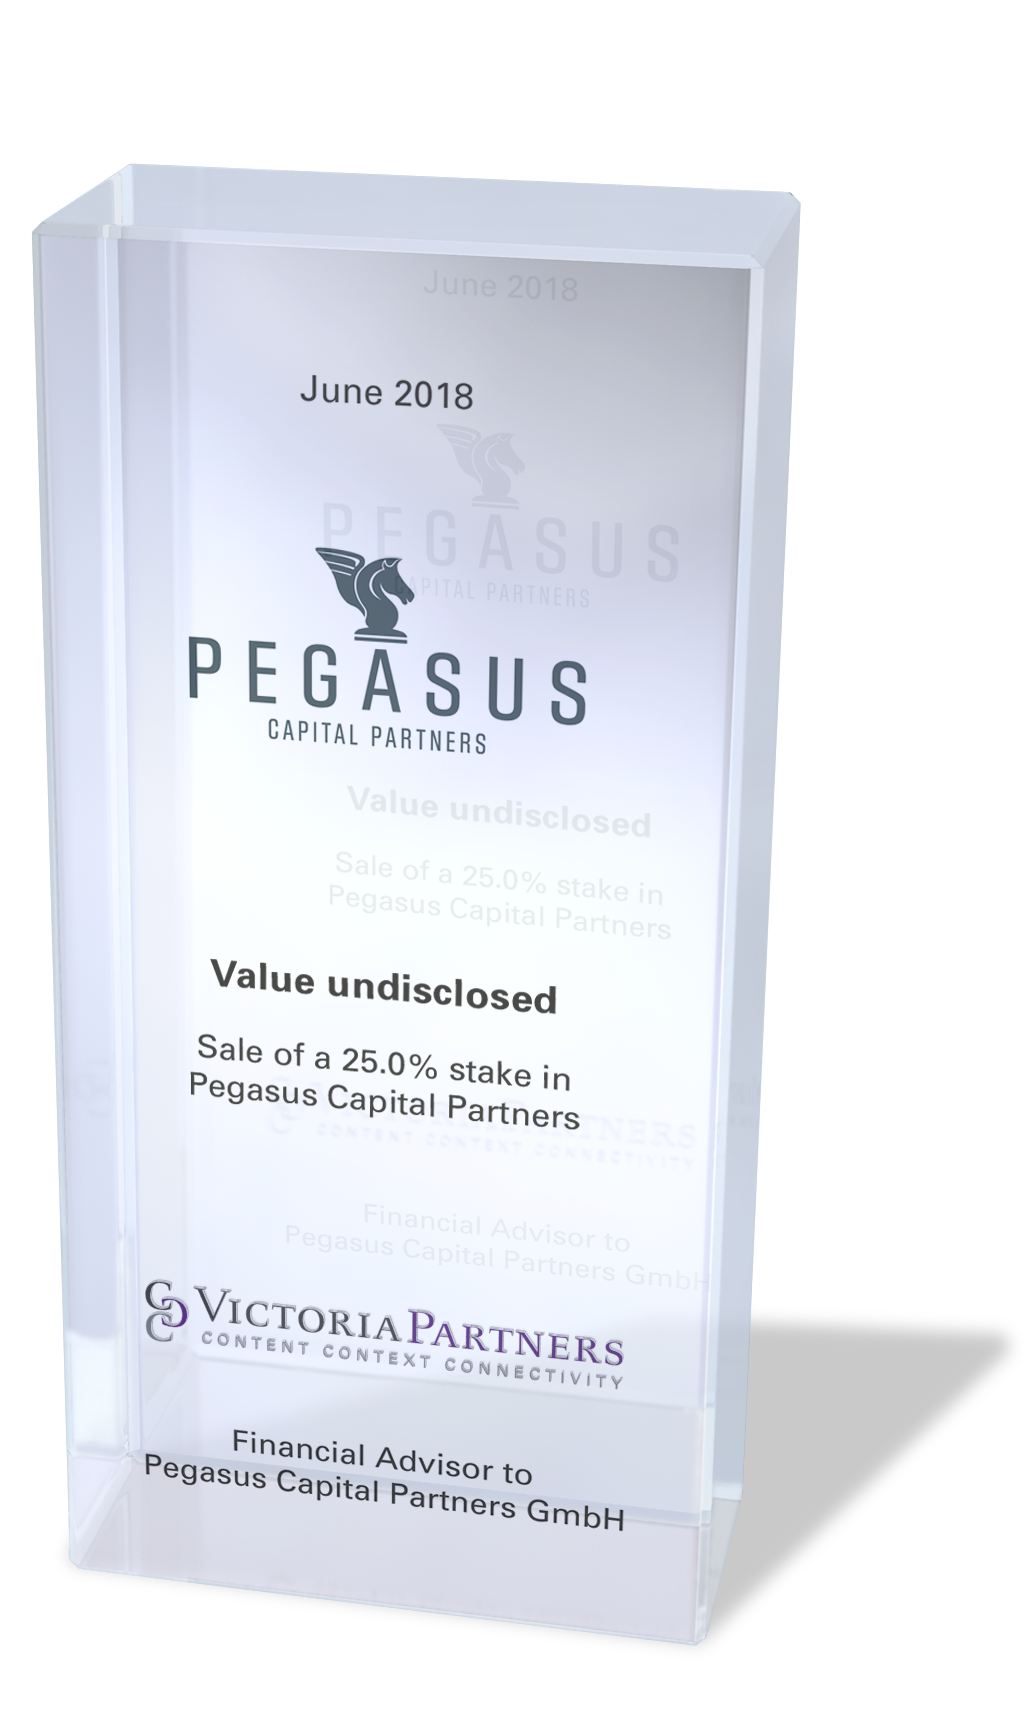 VICTORIAPARTNERS - Financial Advisor to Pegasus Capital Partners GmbH - June 2018